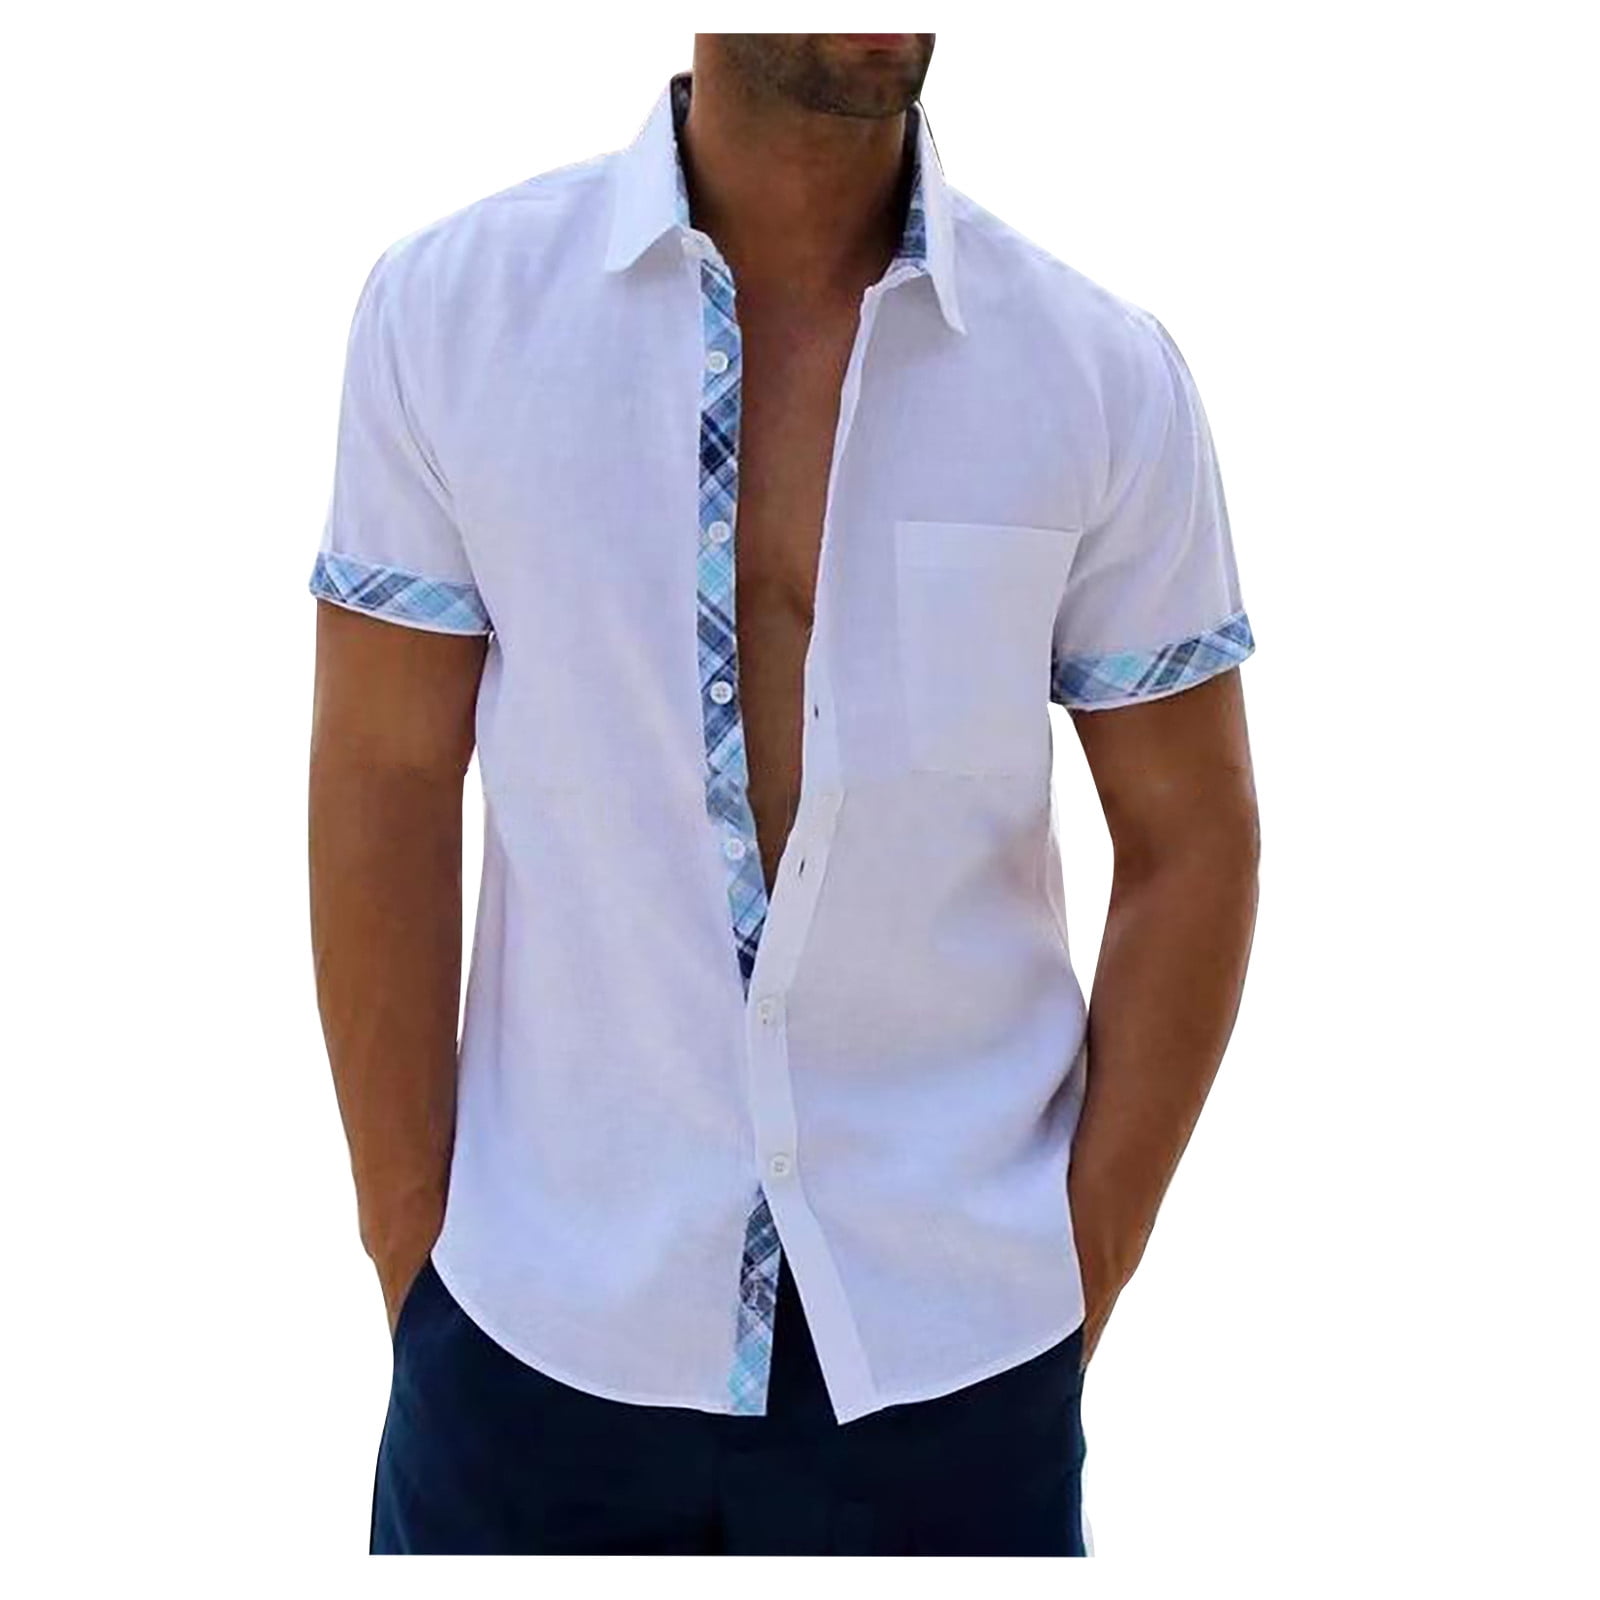 RYRJJ On Clearance Men's Cotton Linen Shirts Plaid Collar Short Sleeve  Button Down Shirt for Men Fashion Summer Beach Casual Shirt Purple S 